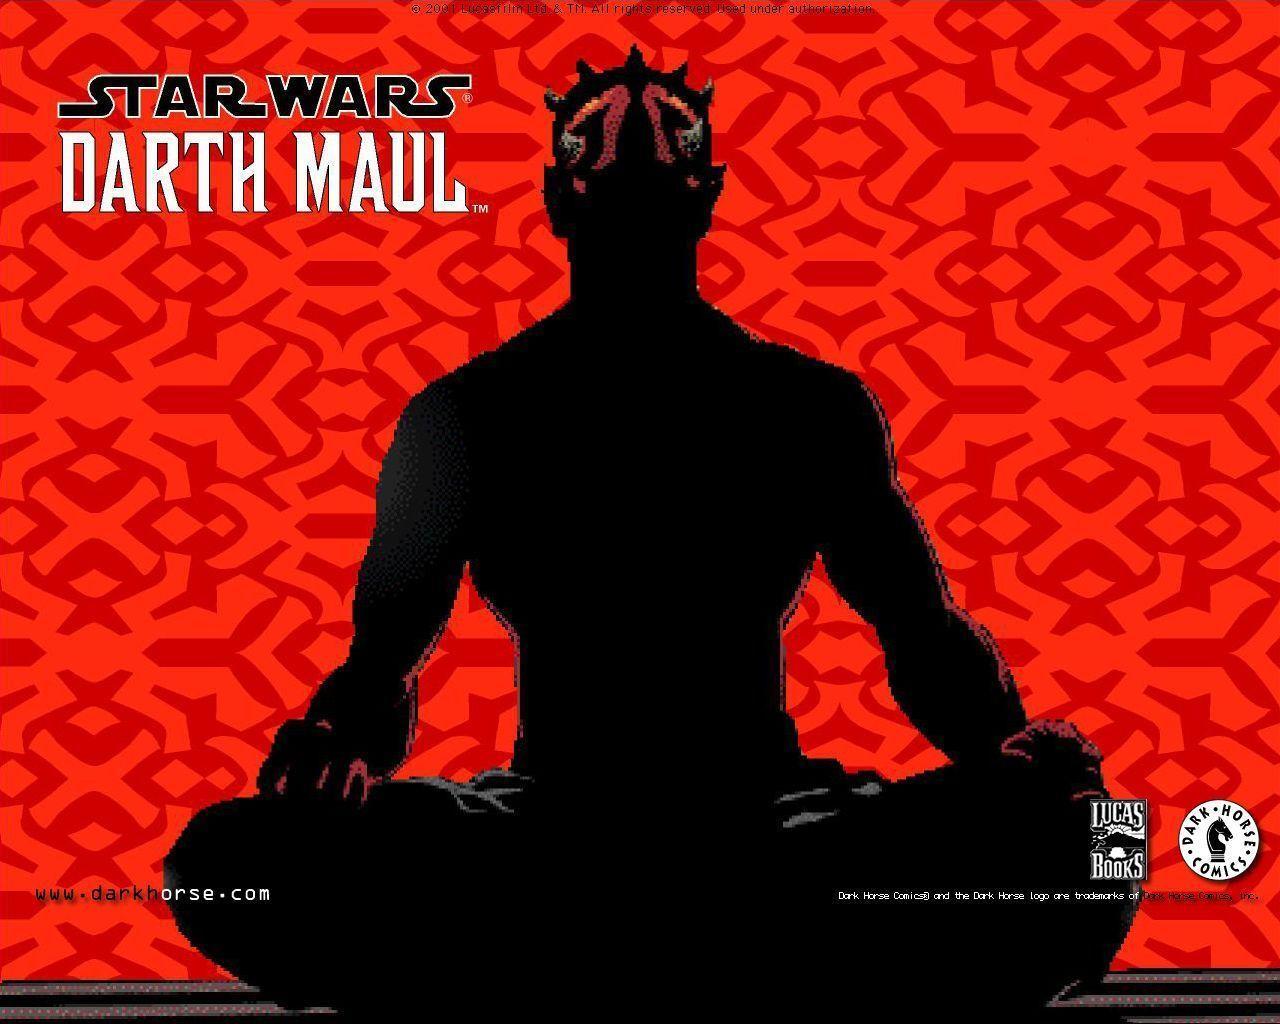 Star Wars: Darth Maul 1 - Desktops - Dark Horse Comics